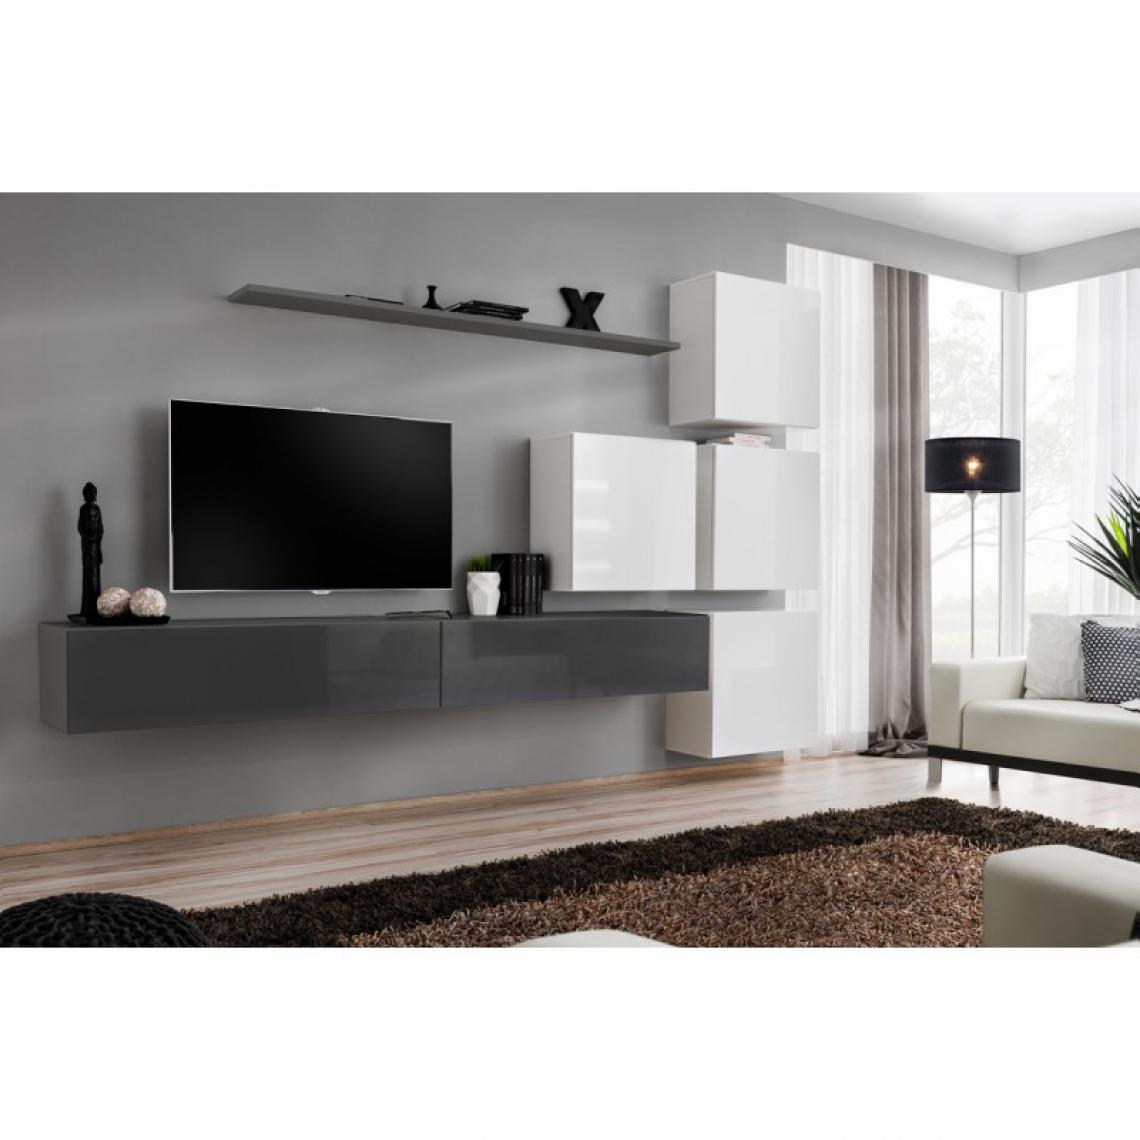 Ac-Deco - Meuble TV Mural Design Switch IX 310cm Gris & Blanc - Meubles TV, Hi-Fi